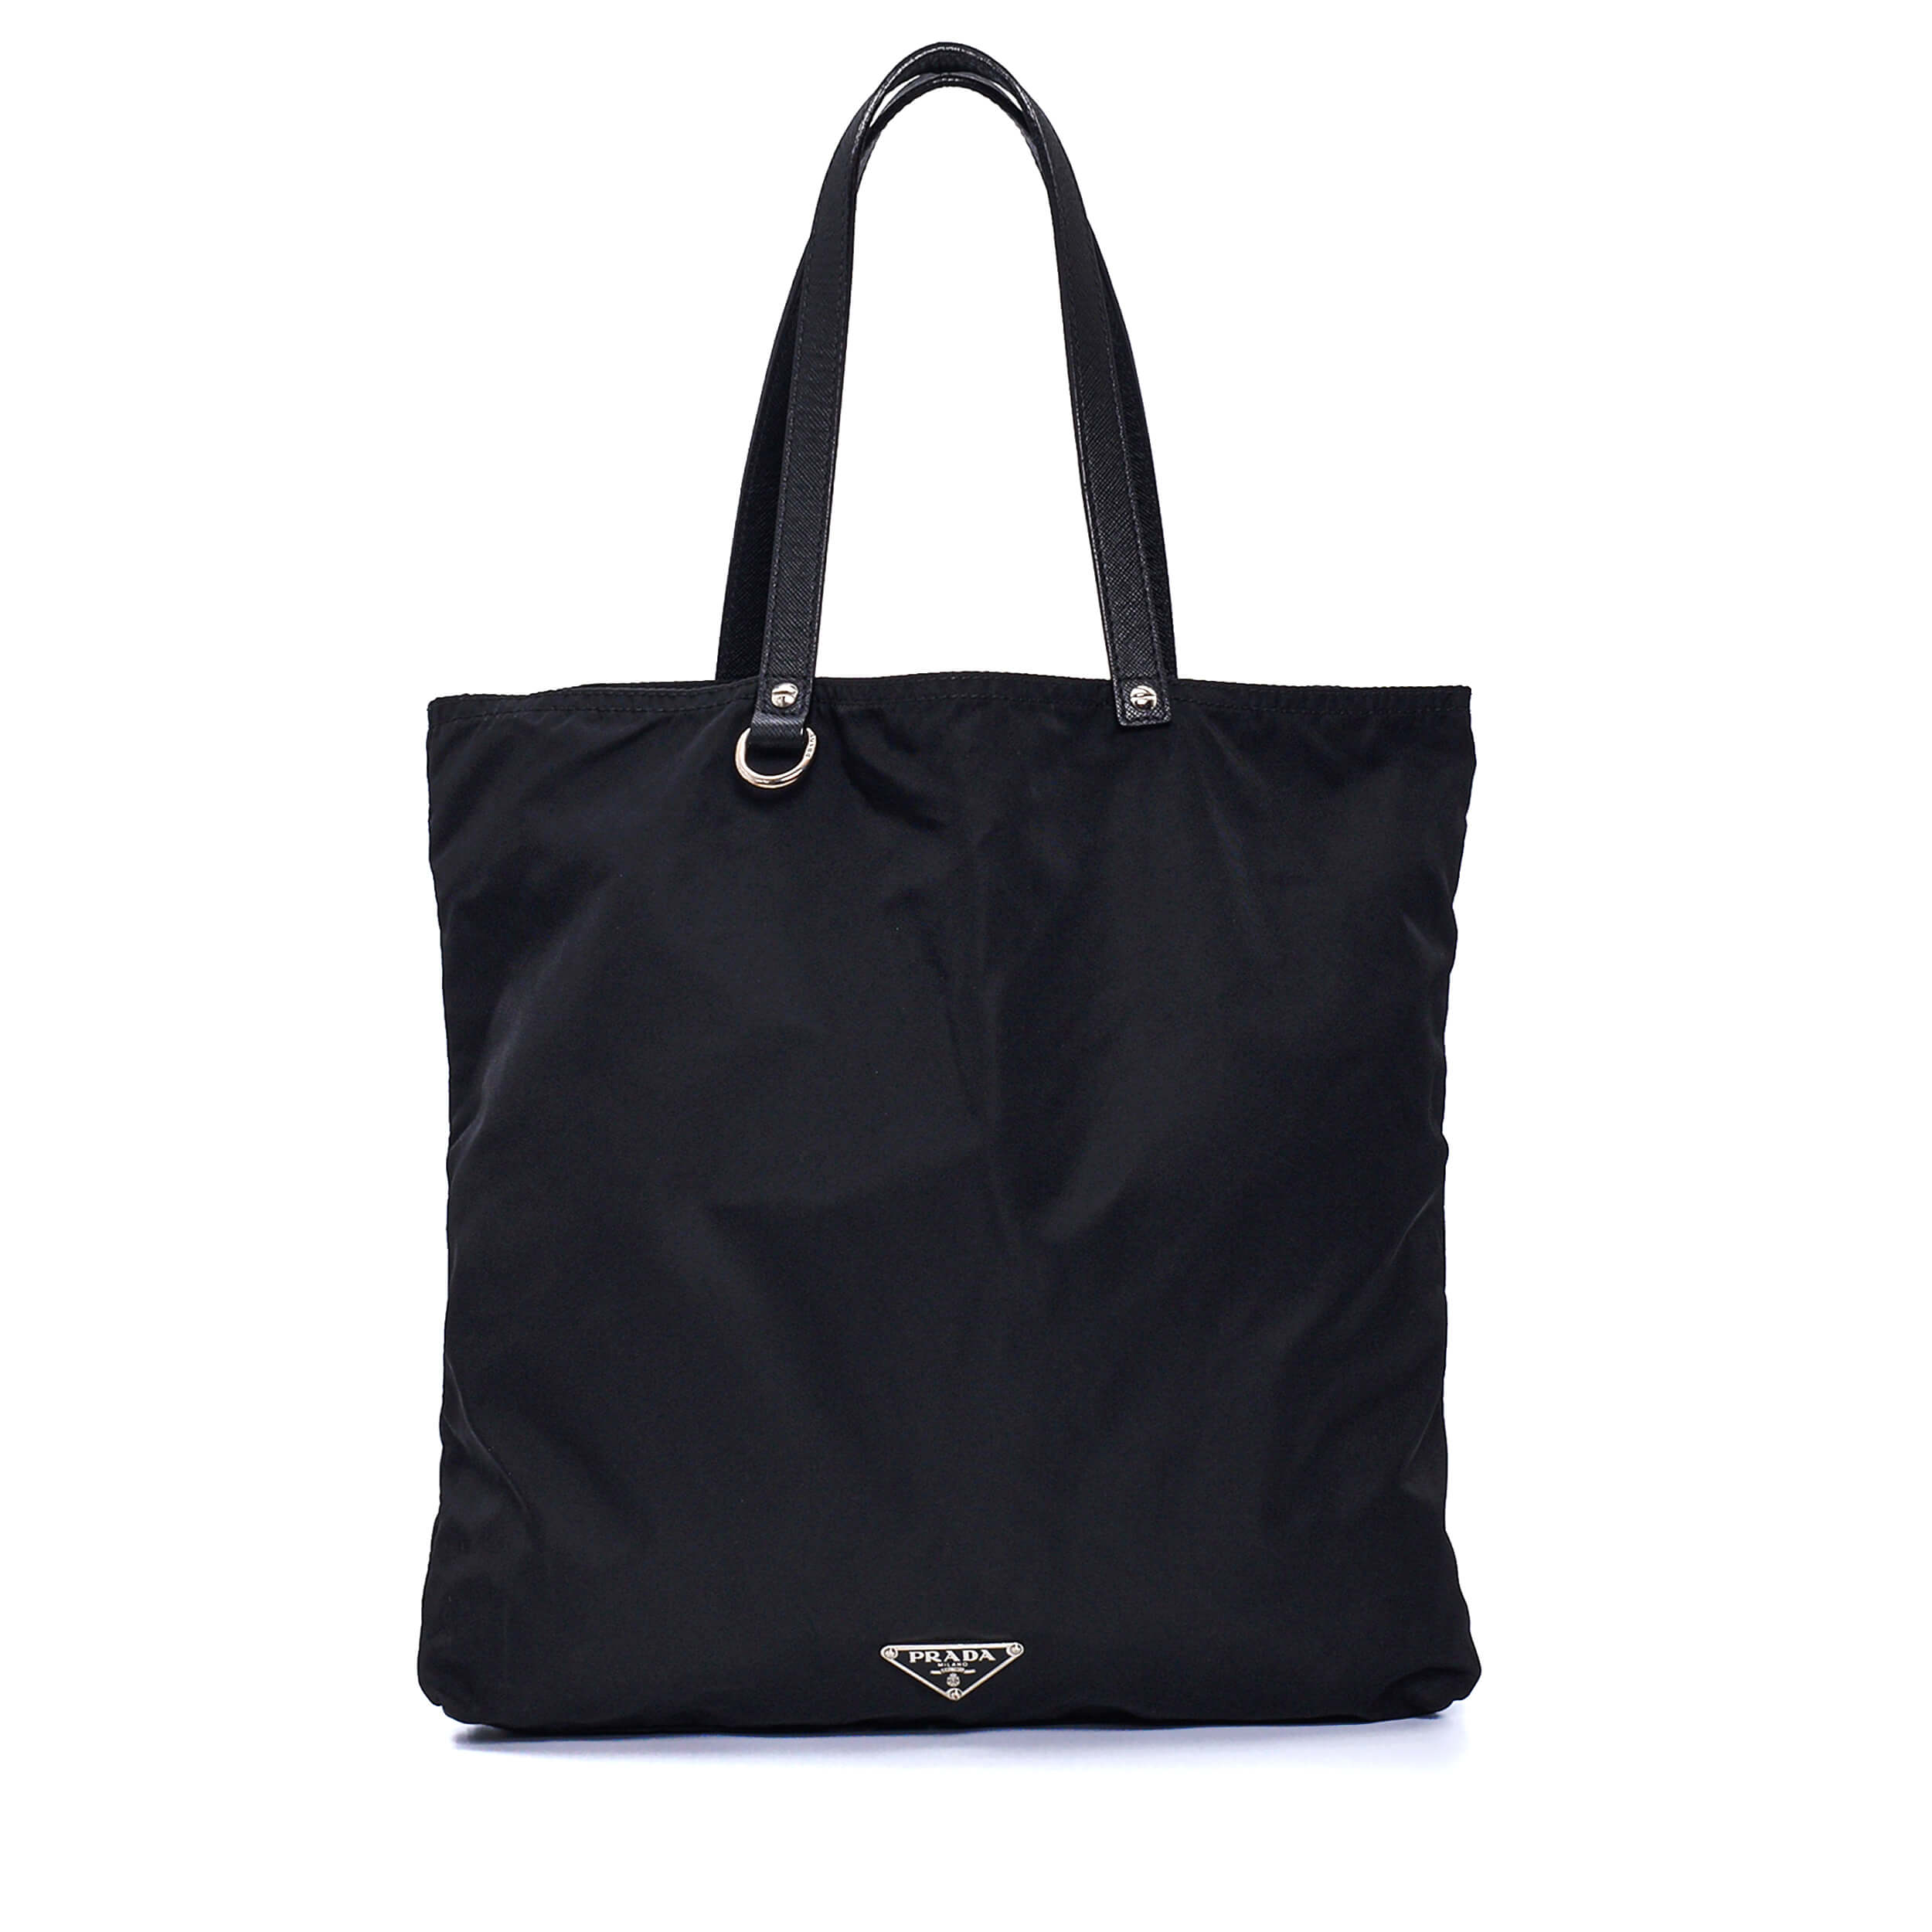 Prada - Black&Floral Patchwork Nylon Small Tote Bag